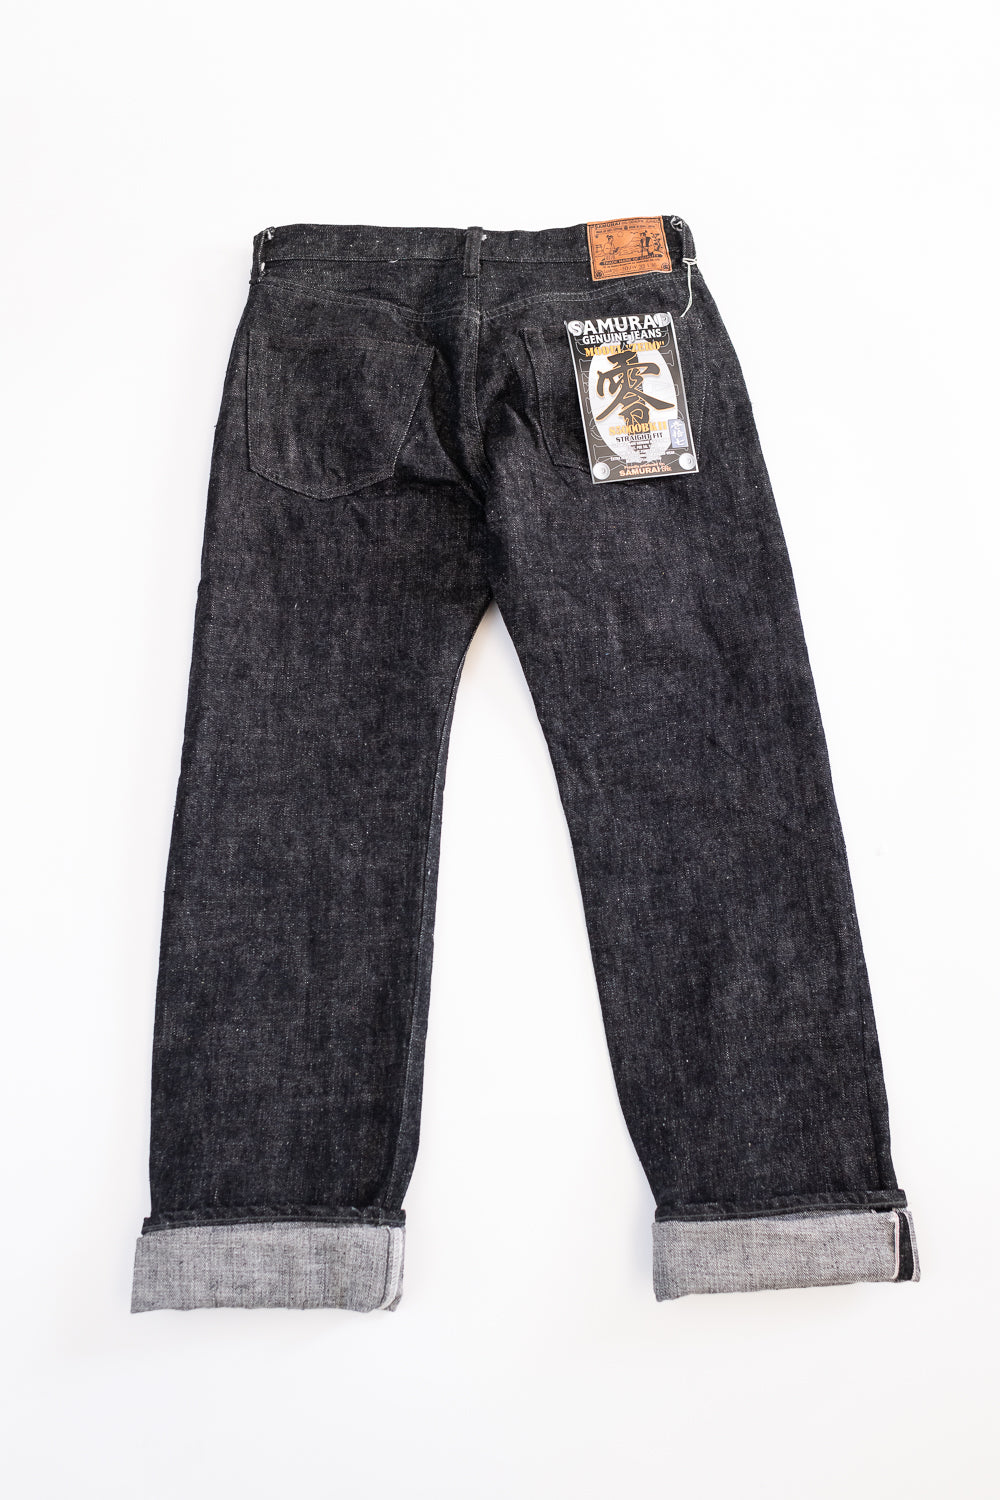 Buy Indigo Jeans for Men by LEVIS Online | Ajio.com